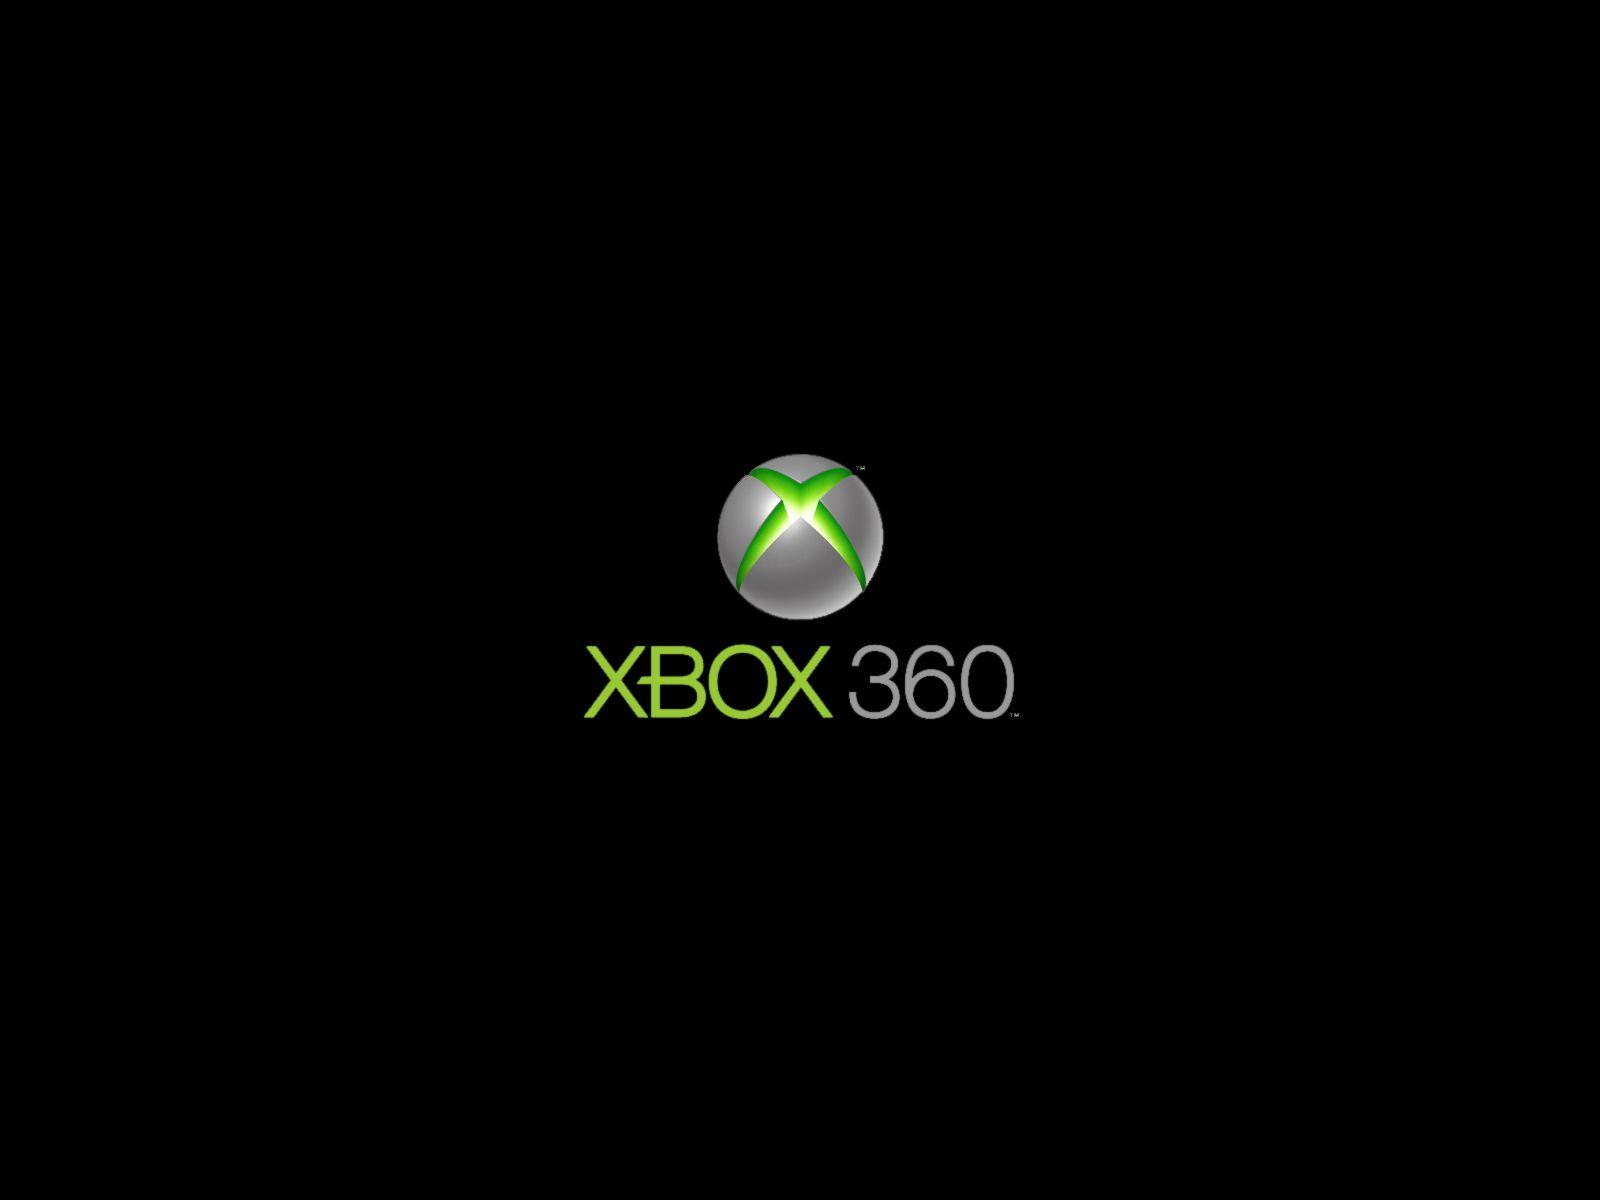 Fonds d&;écran Xbox 360, tous les wallpaper Xbox 360